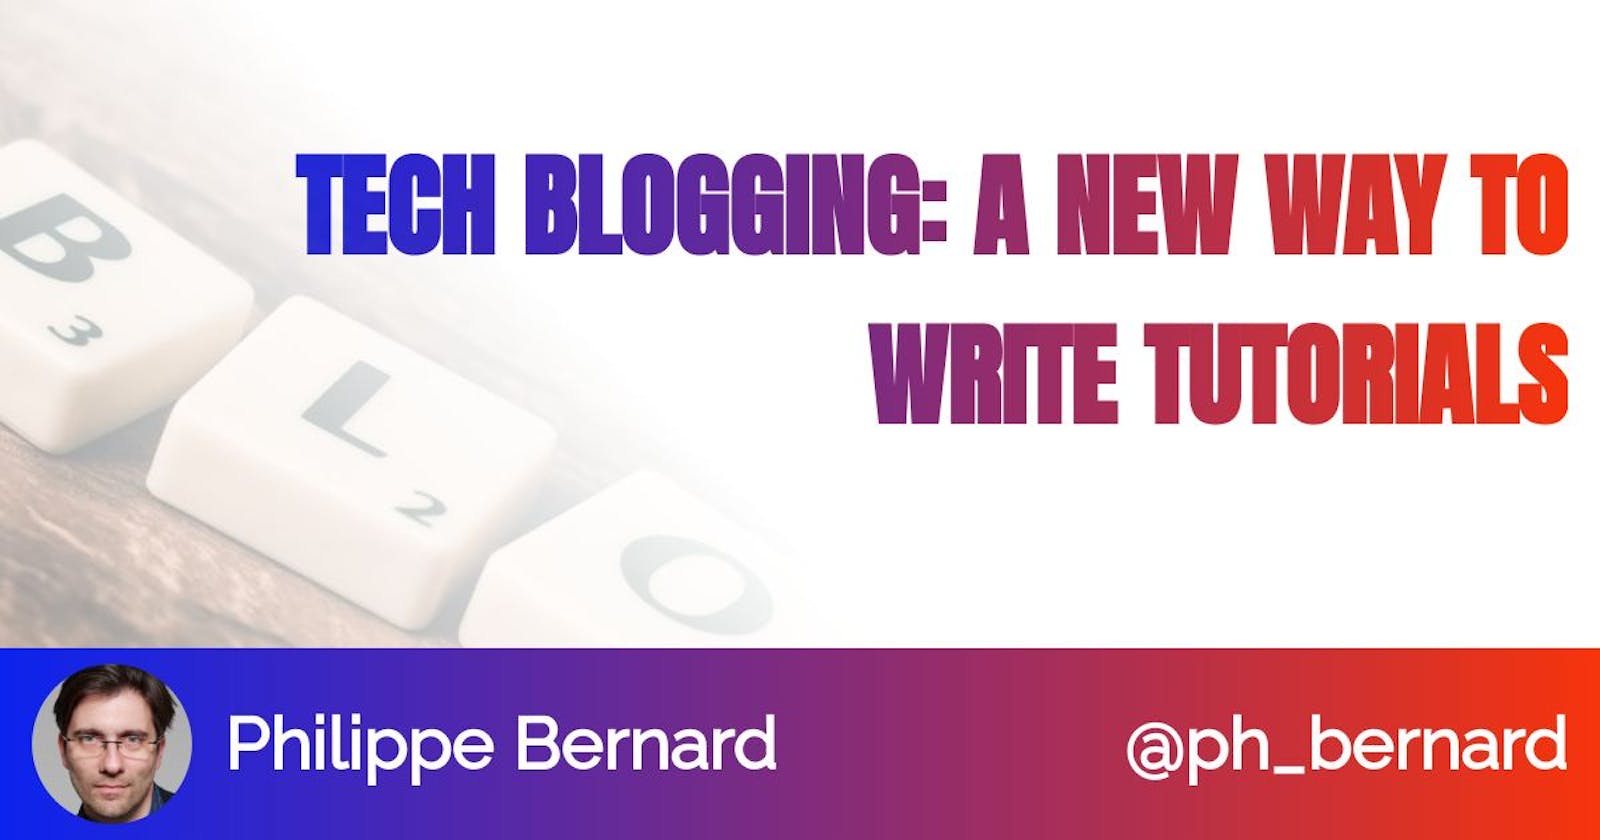 Tech blogging: a new way to write tutorials